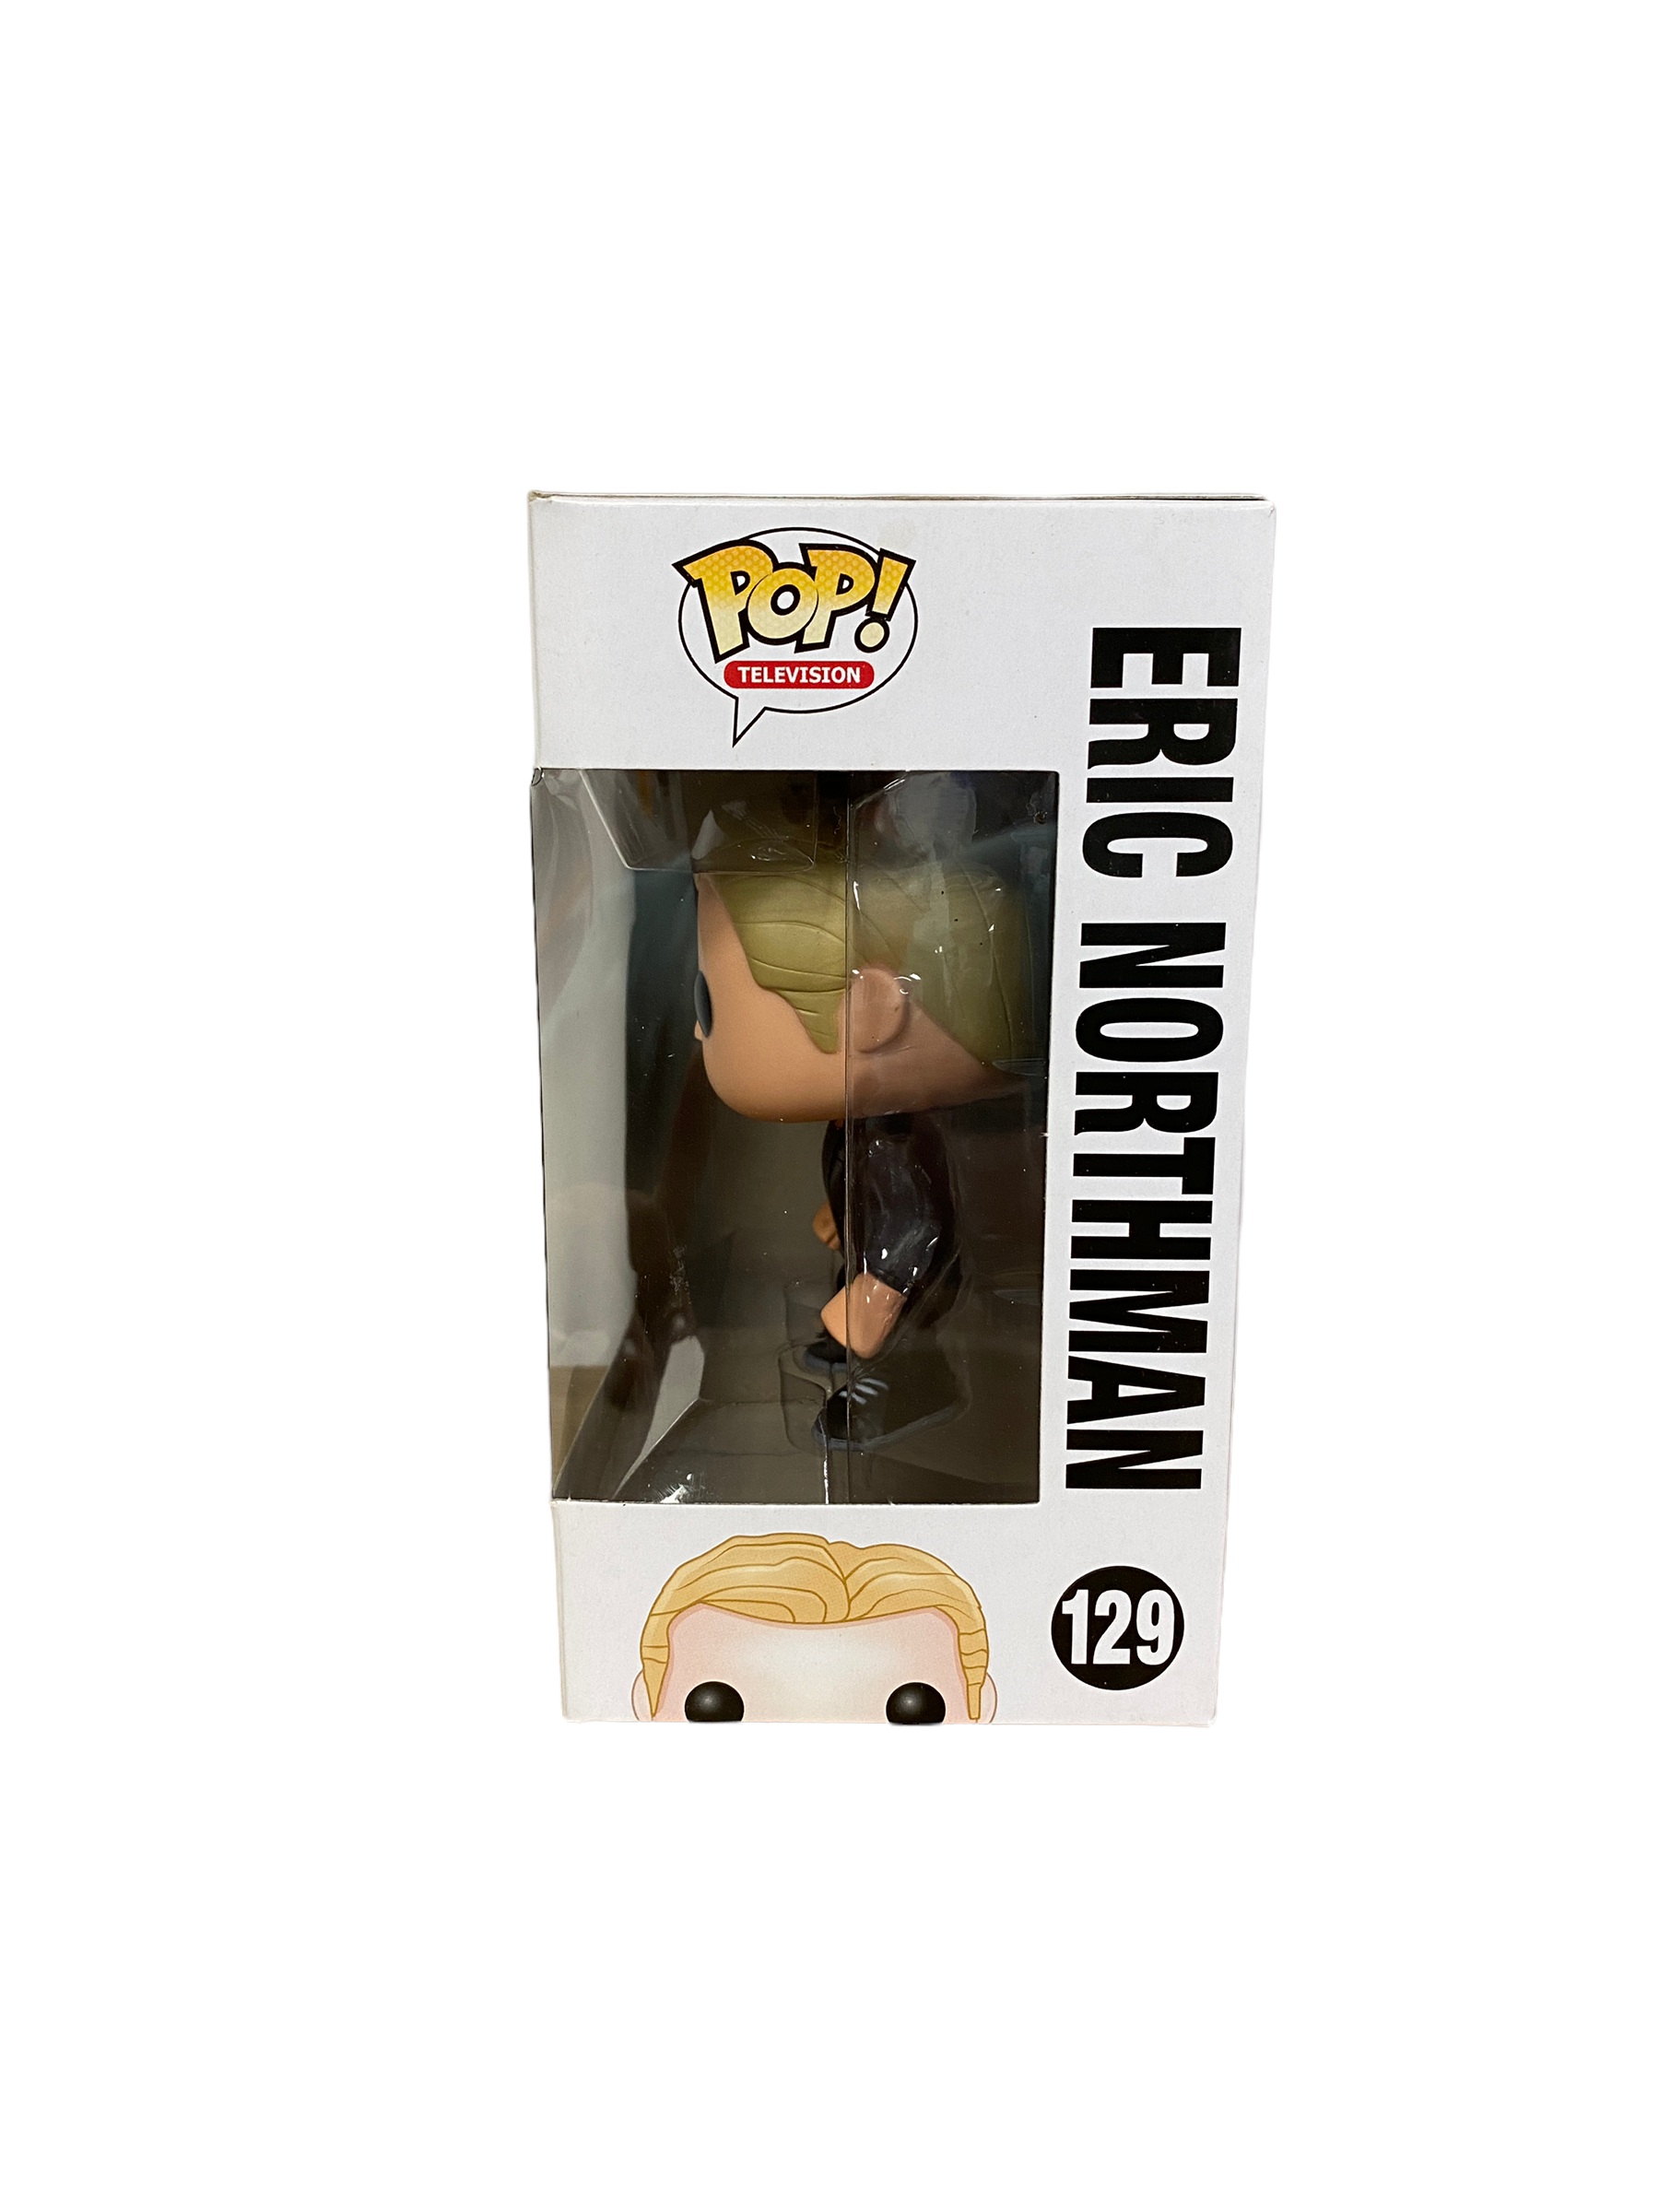 Eric Northman #129 Funko Pop! - True Blood - 2014 Pop! - Condition 8.5/10